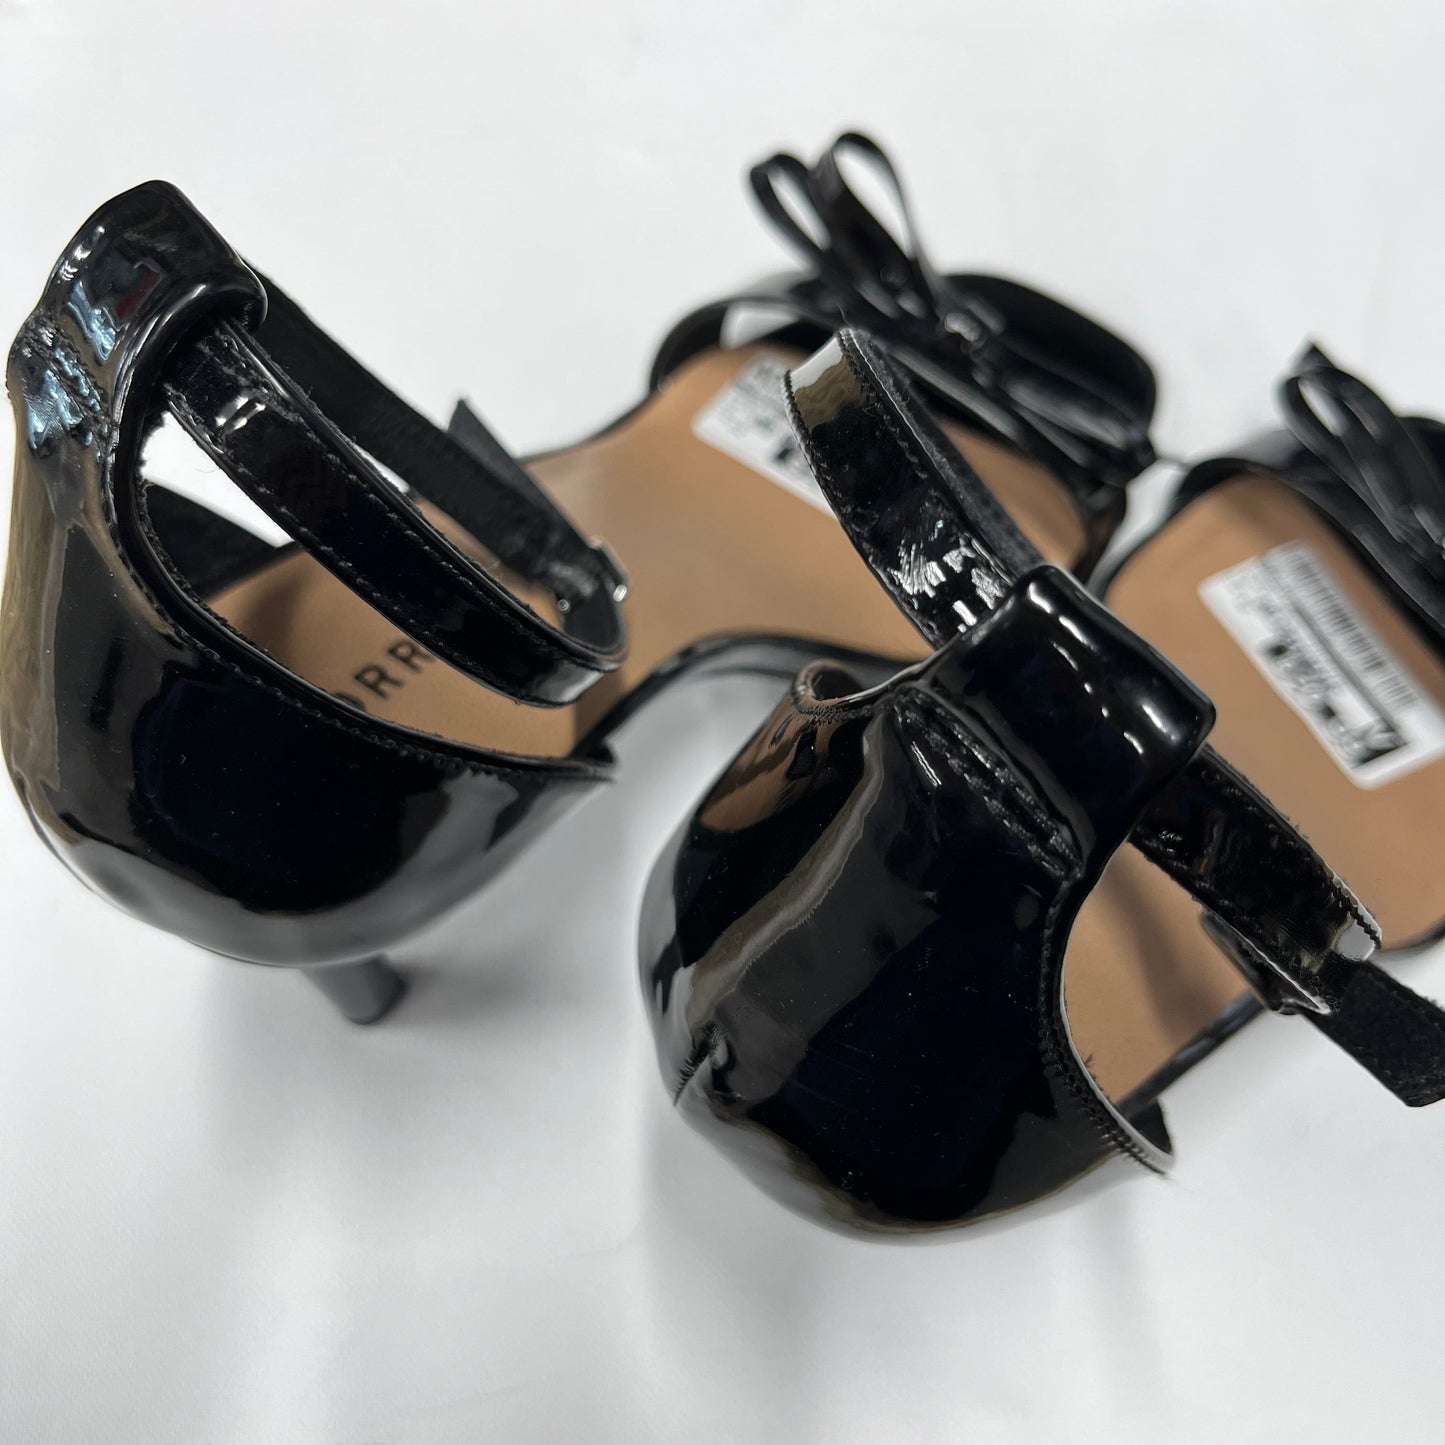 Shoes Heels Stiletto By Torrid  Size: 12